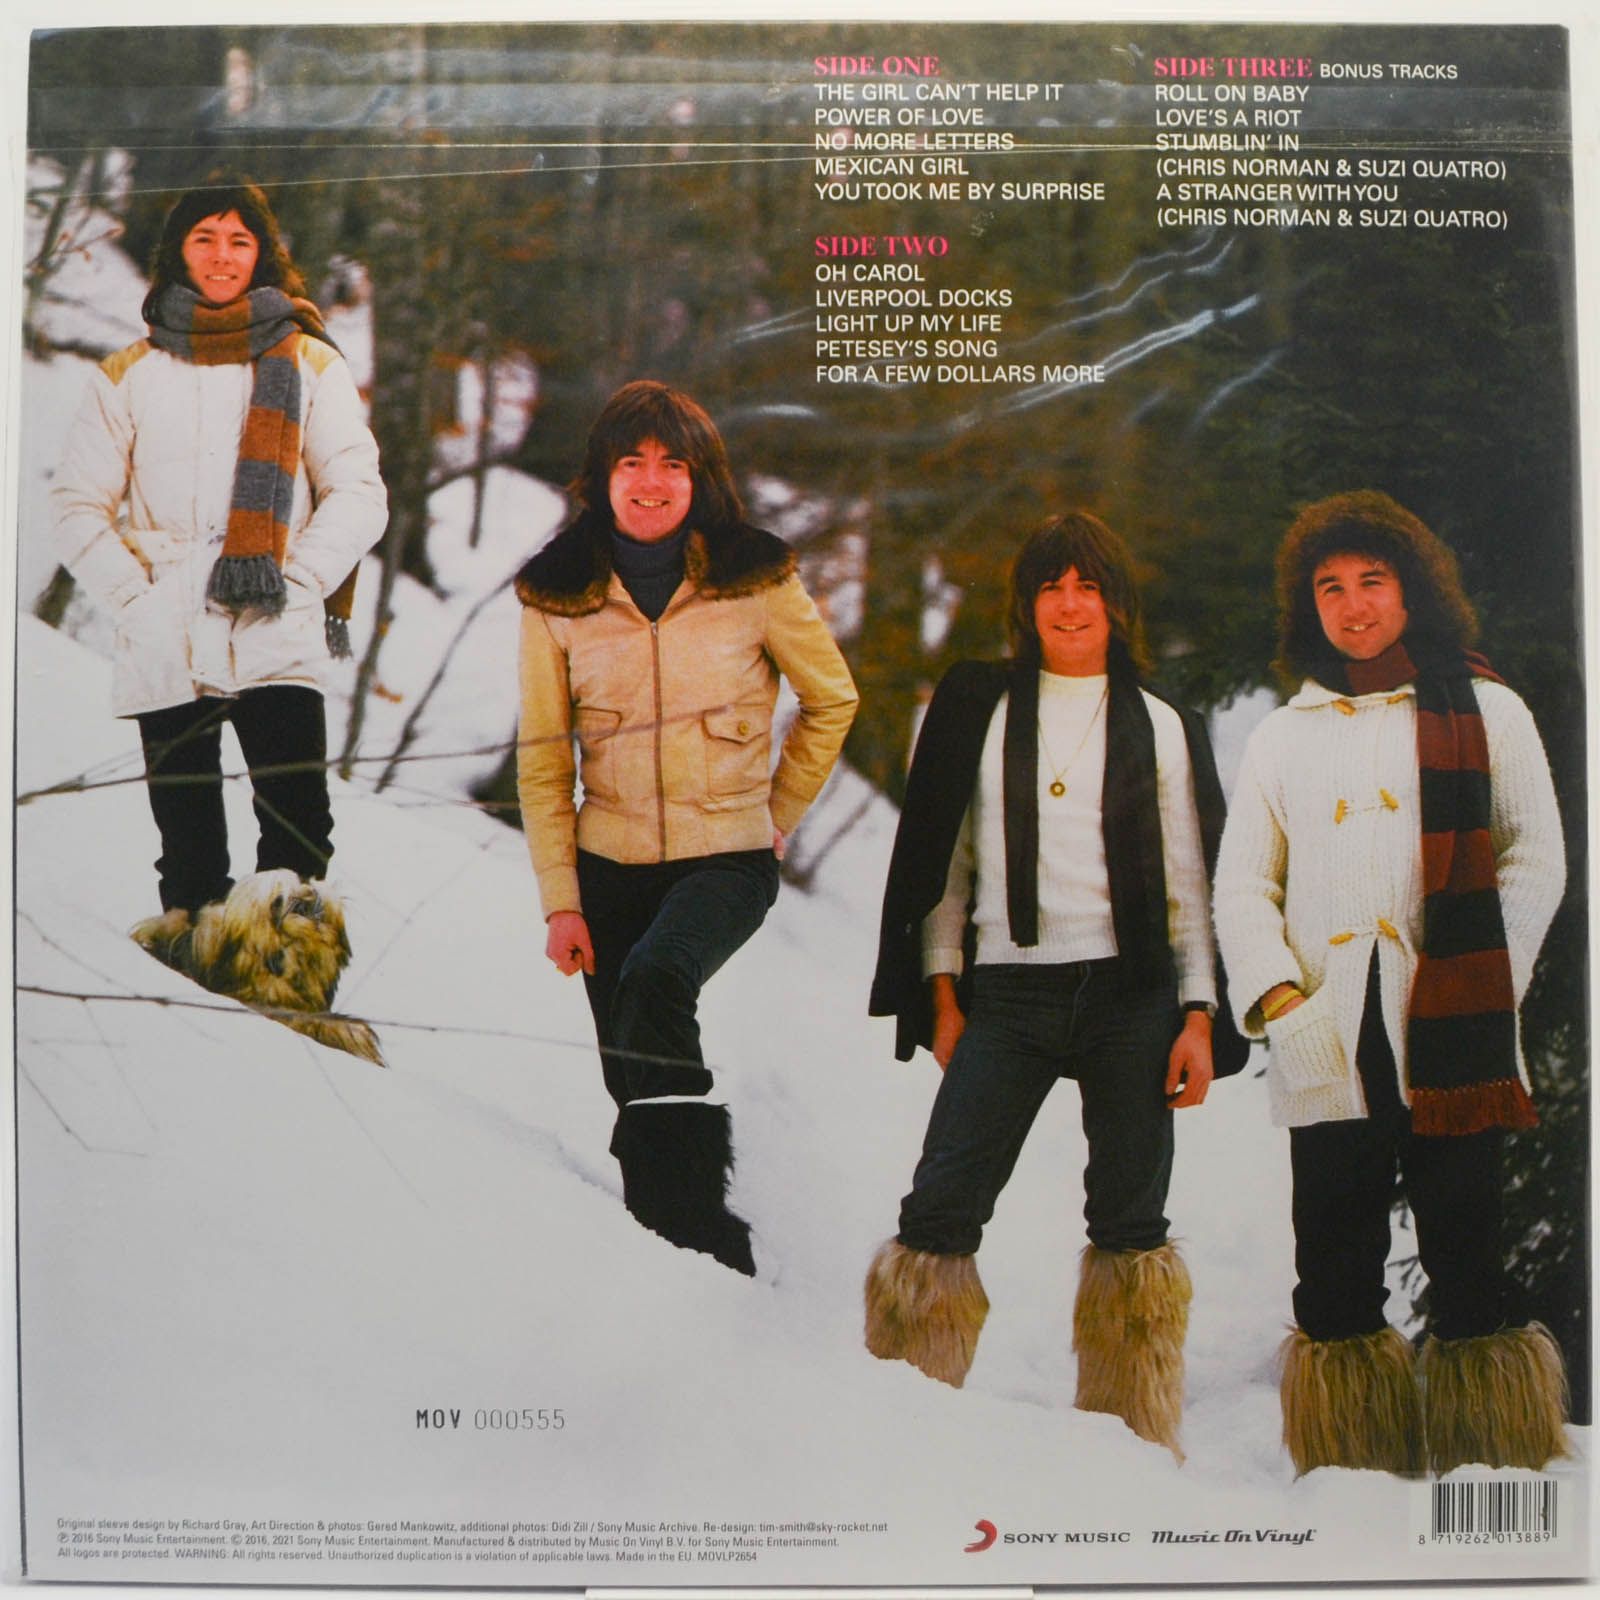 Smokie — The Montreux Album (2LP), 1978